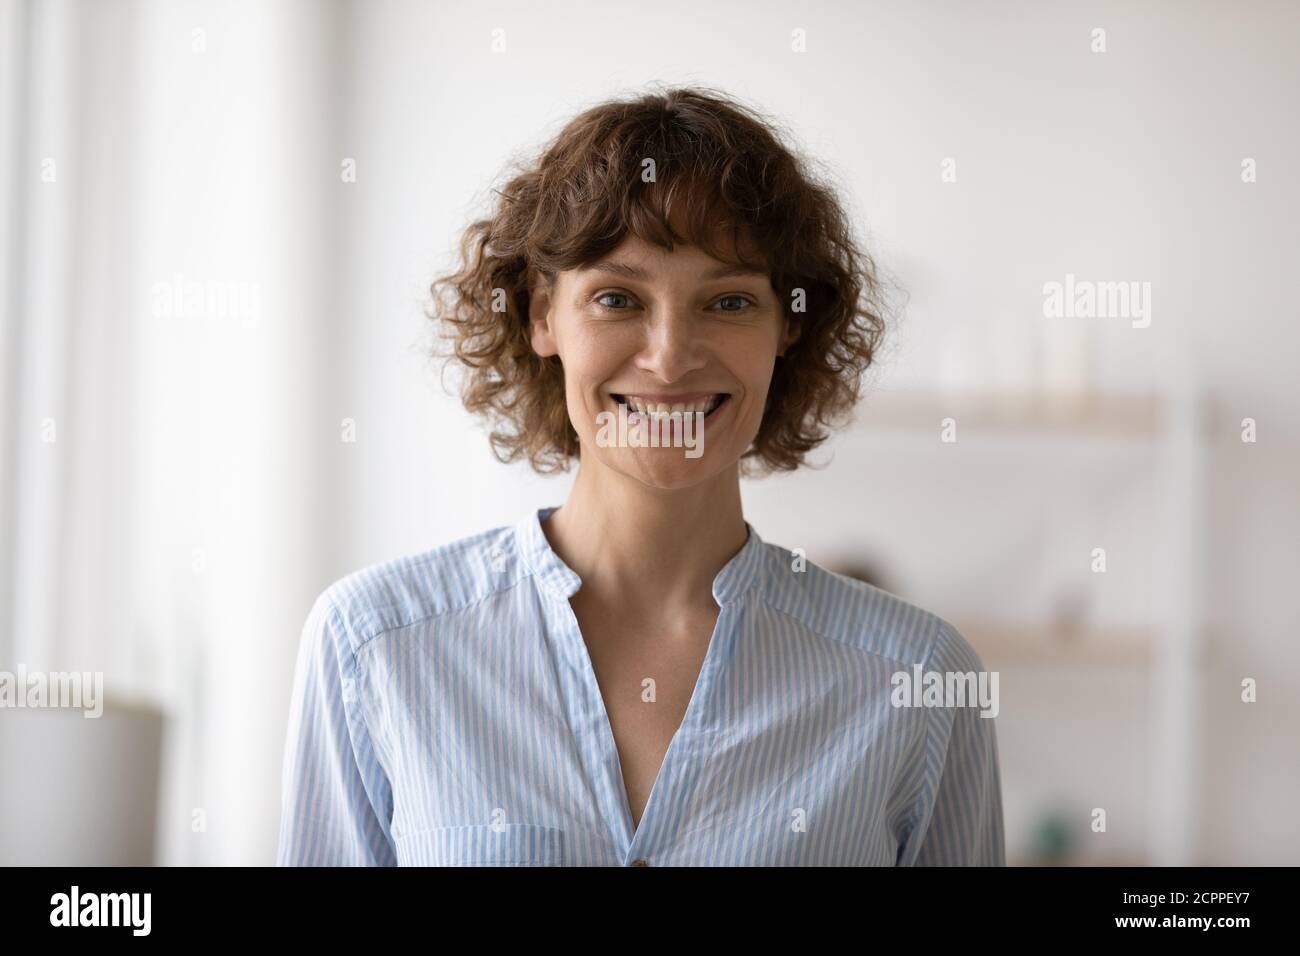 Headshot portrait of smiling 40s caucasian woman posing Stock Photo